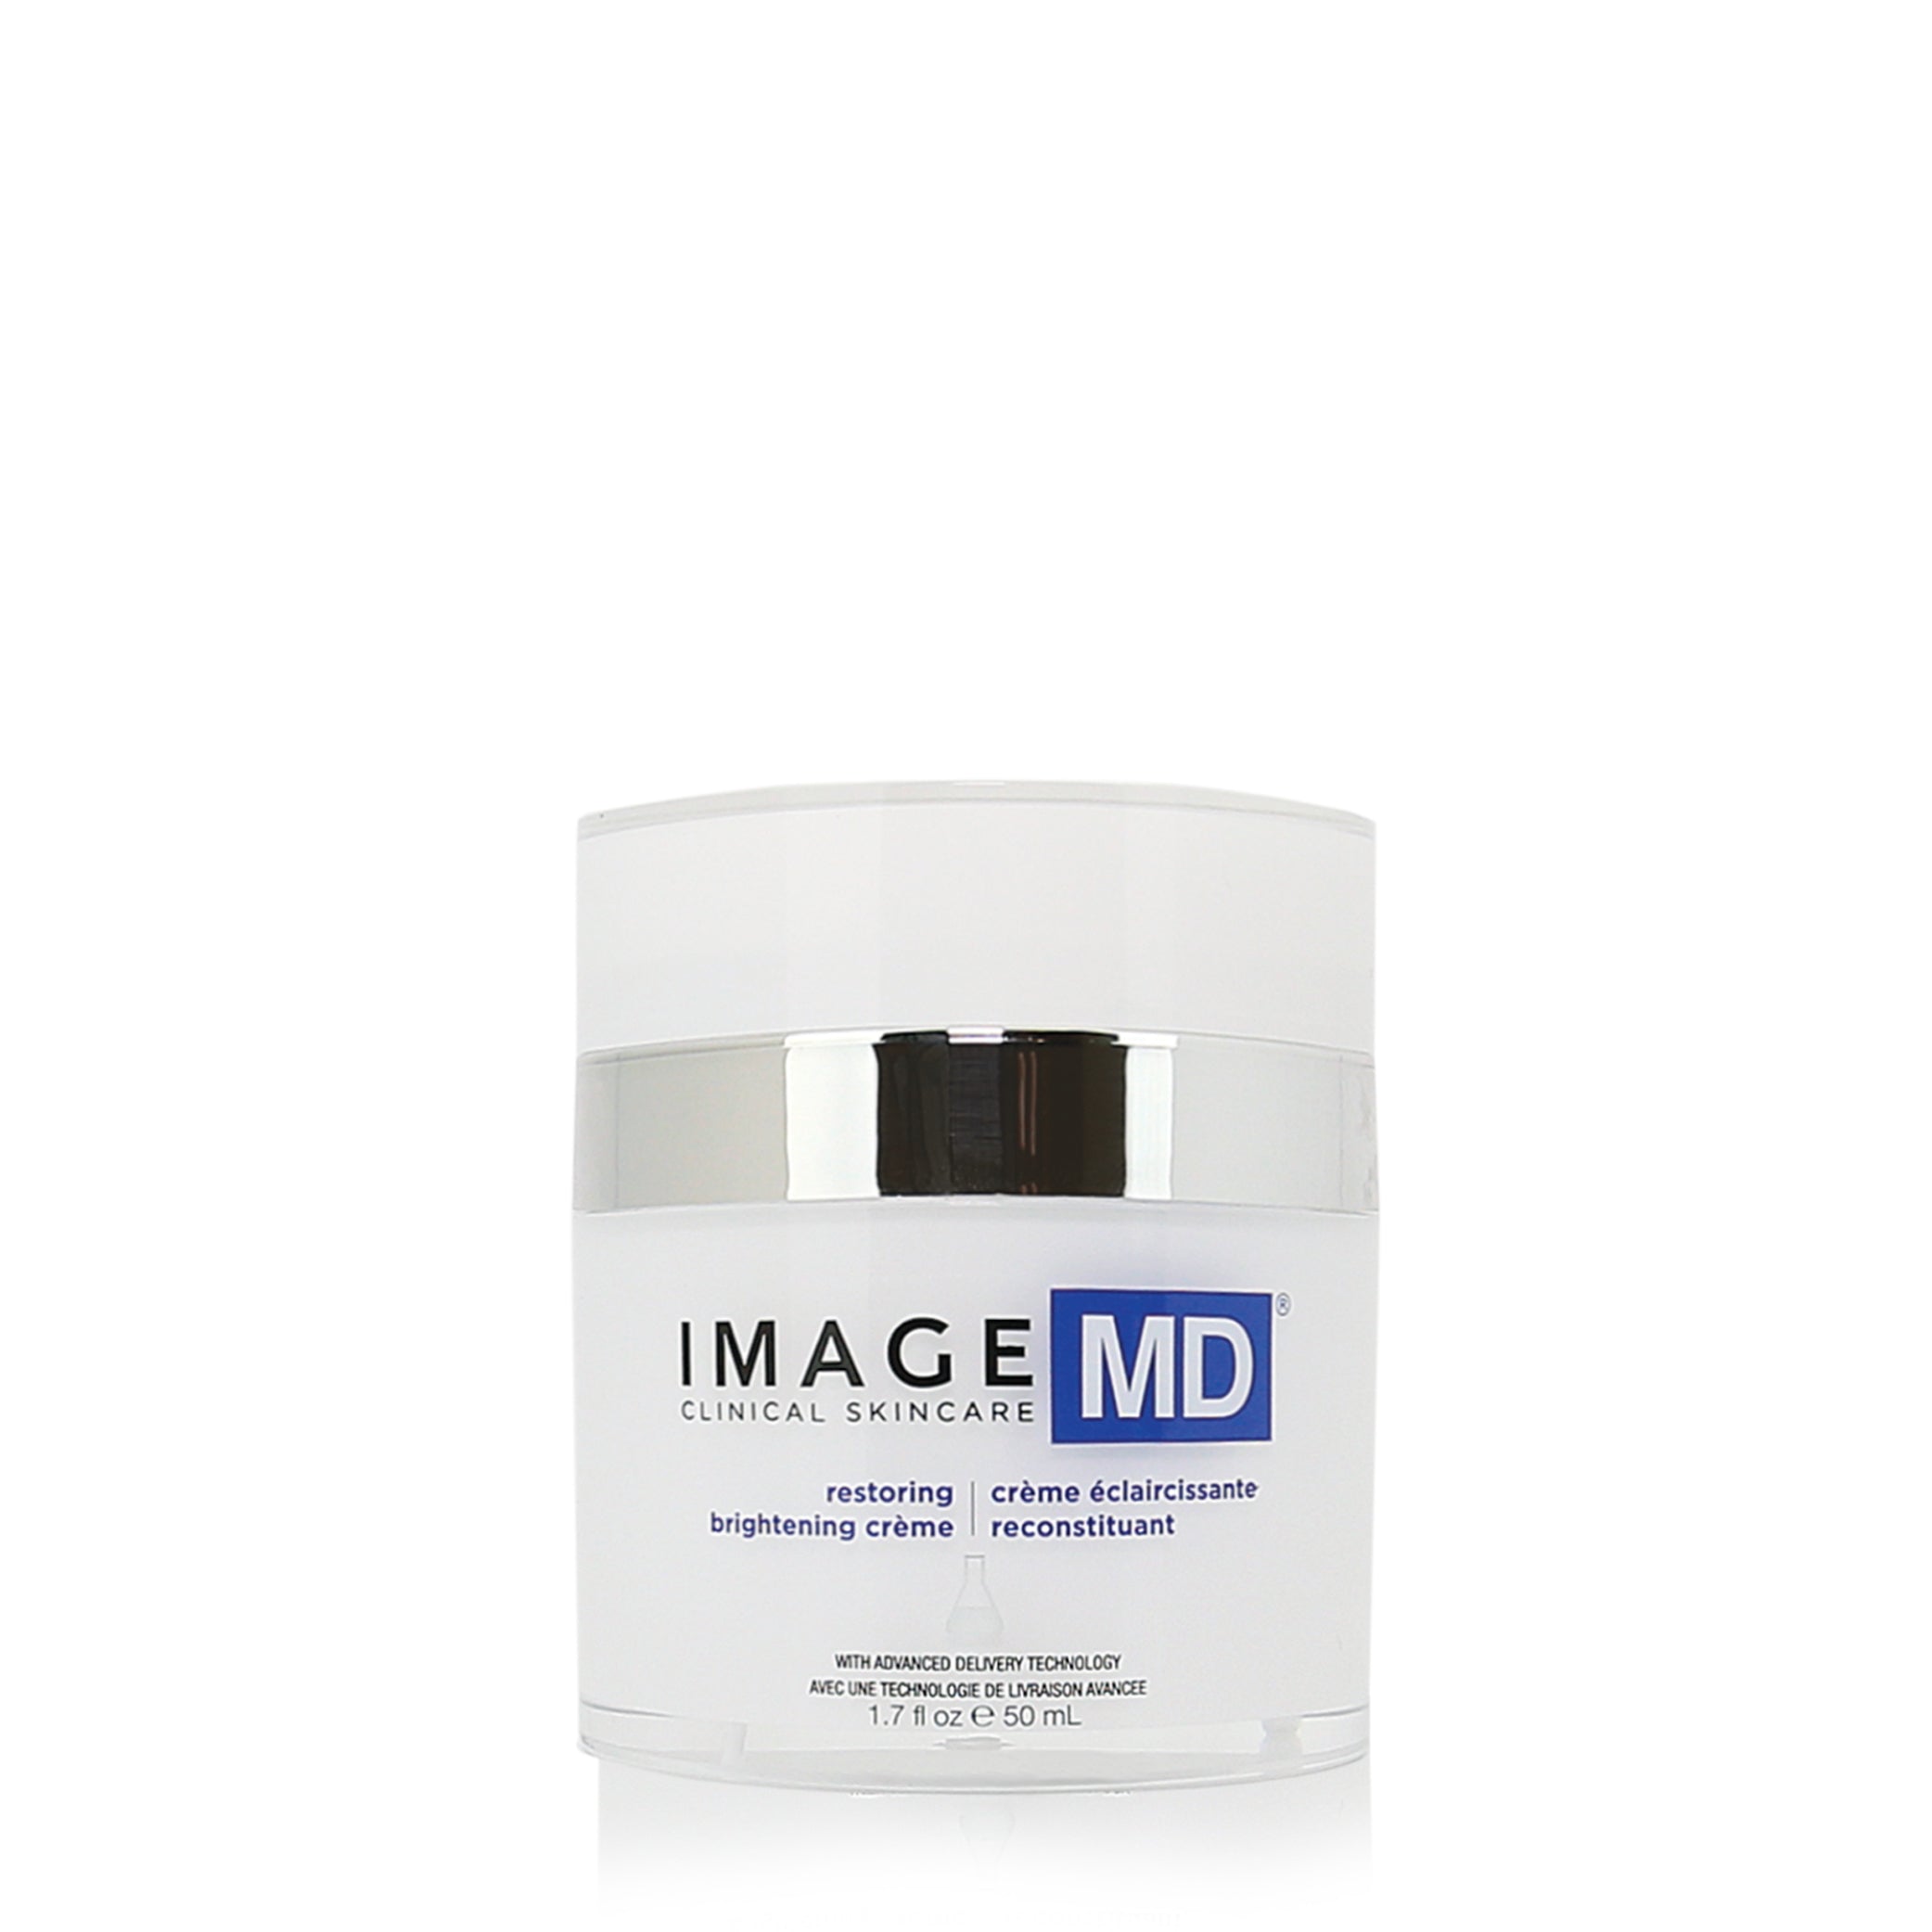 IMAGE MD® Restoring Brightening Crème